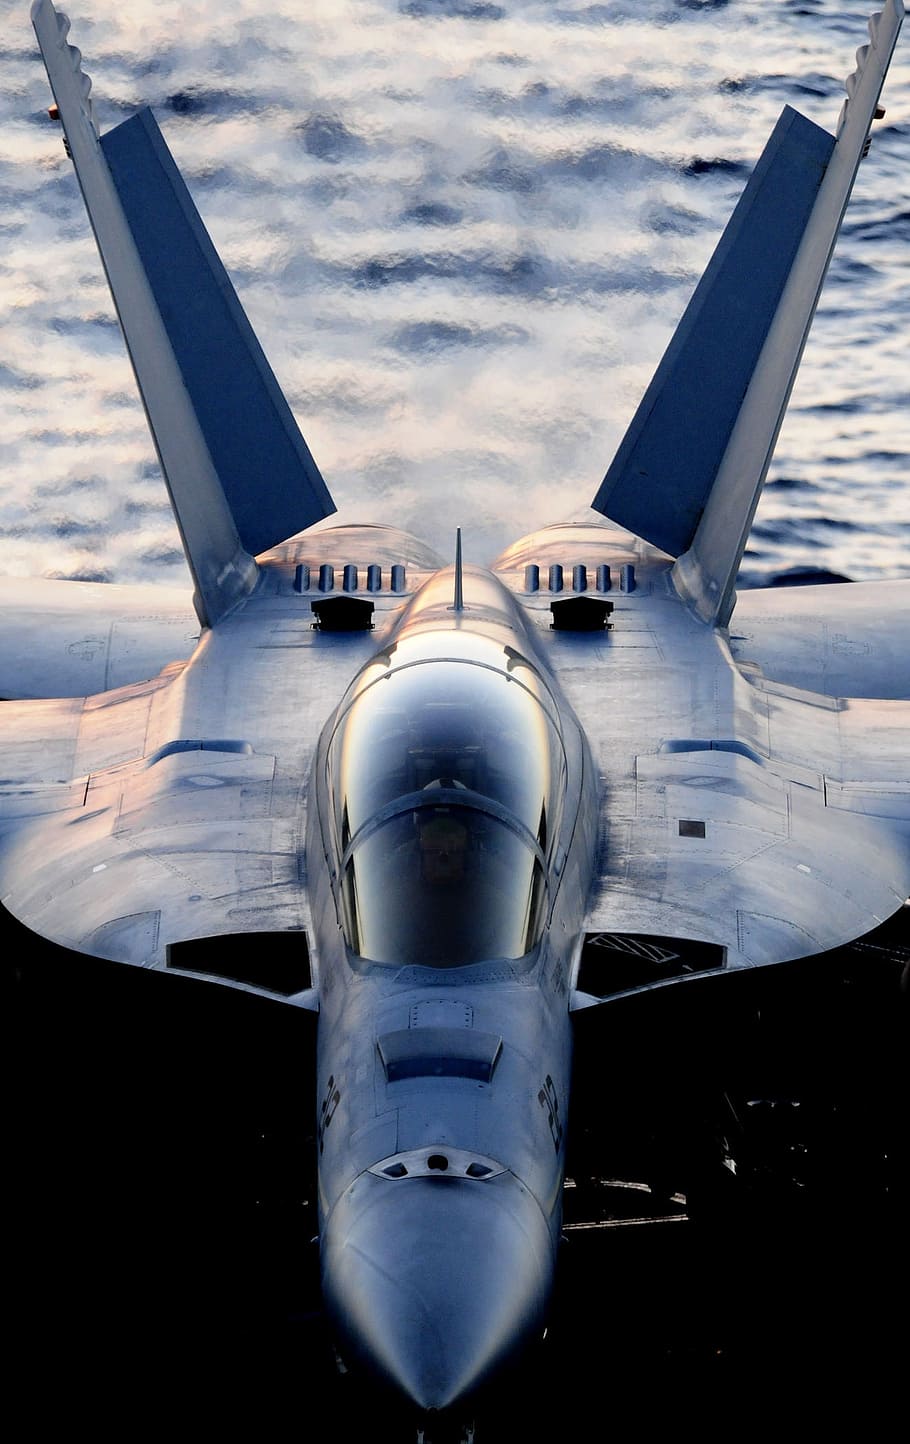 Download Jet Fighter Flies Sunny Day Wallpaper | Wallpapers.com